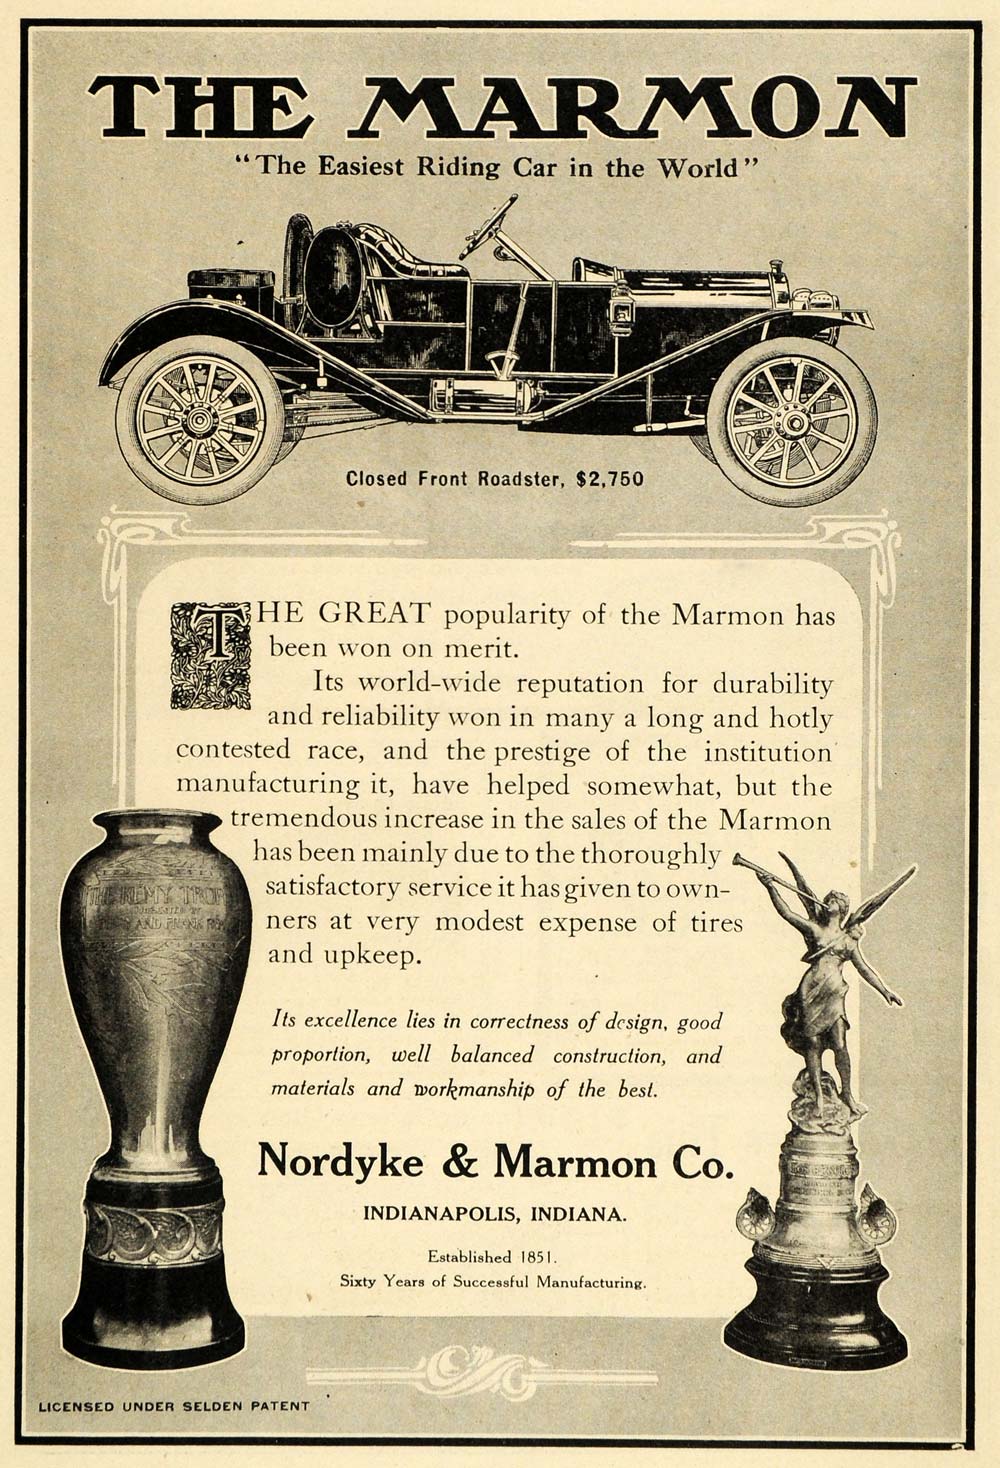 1911 Ad Nordyke & Marmon Co. Roadster Car Trophies - ORIGINAL ADVERTISING PM2